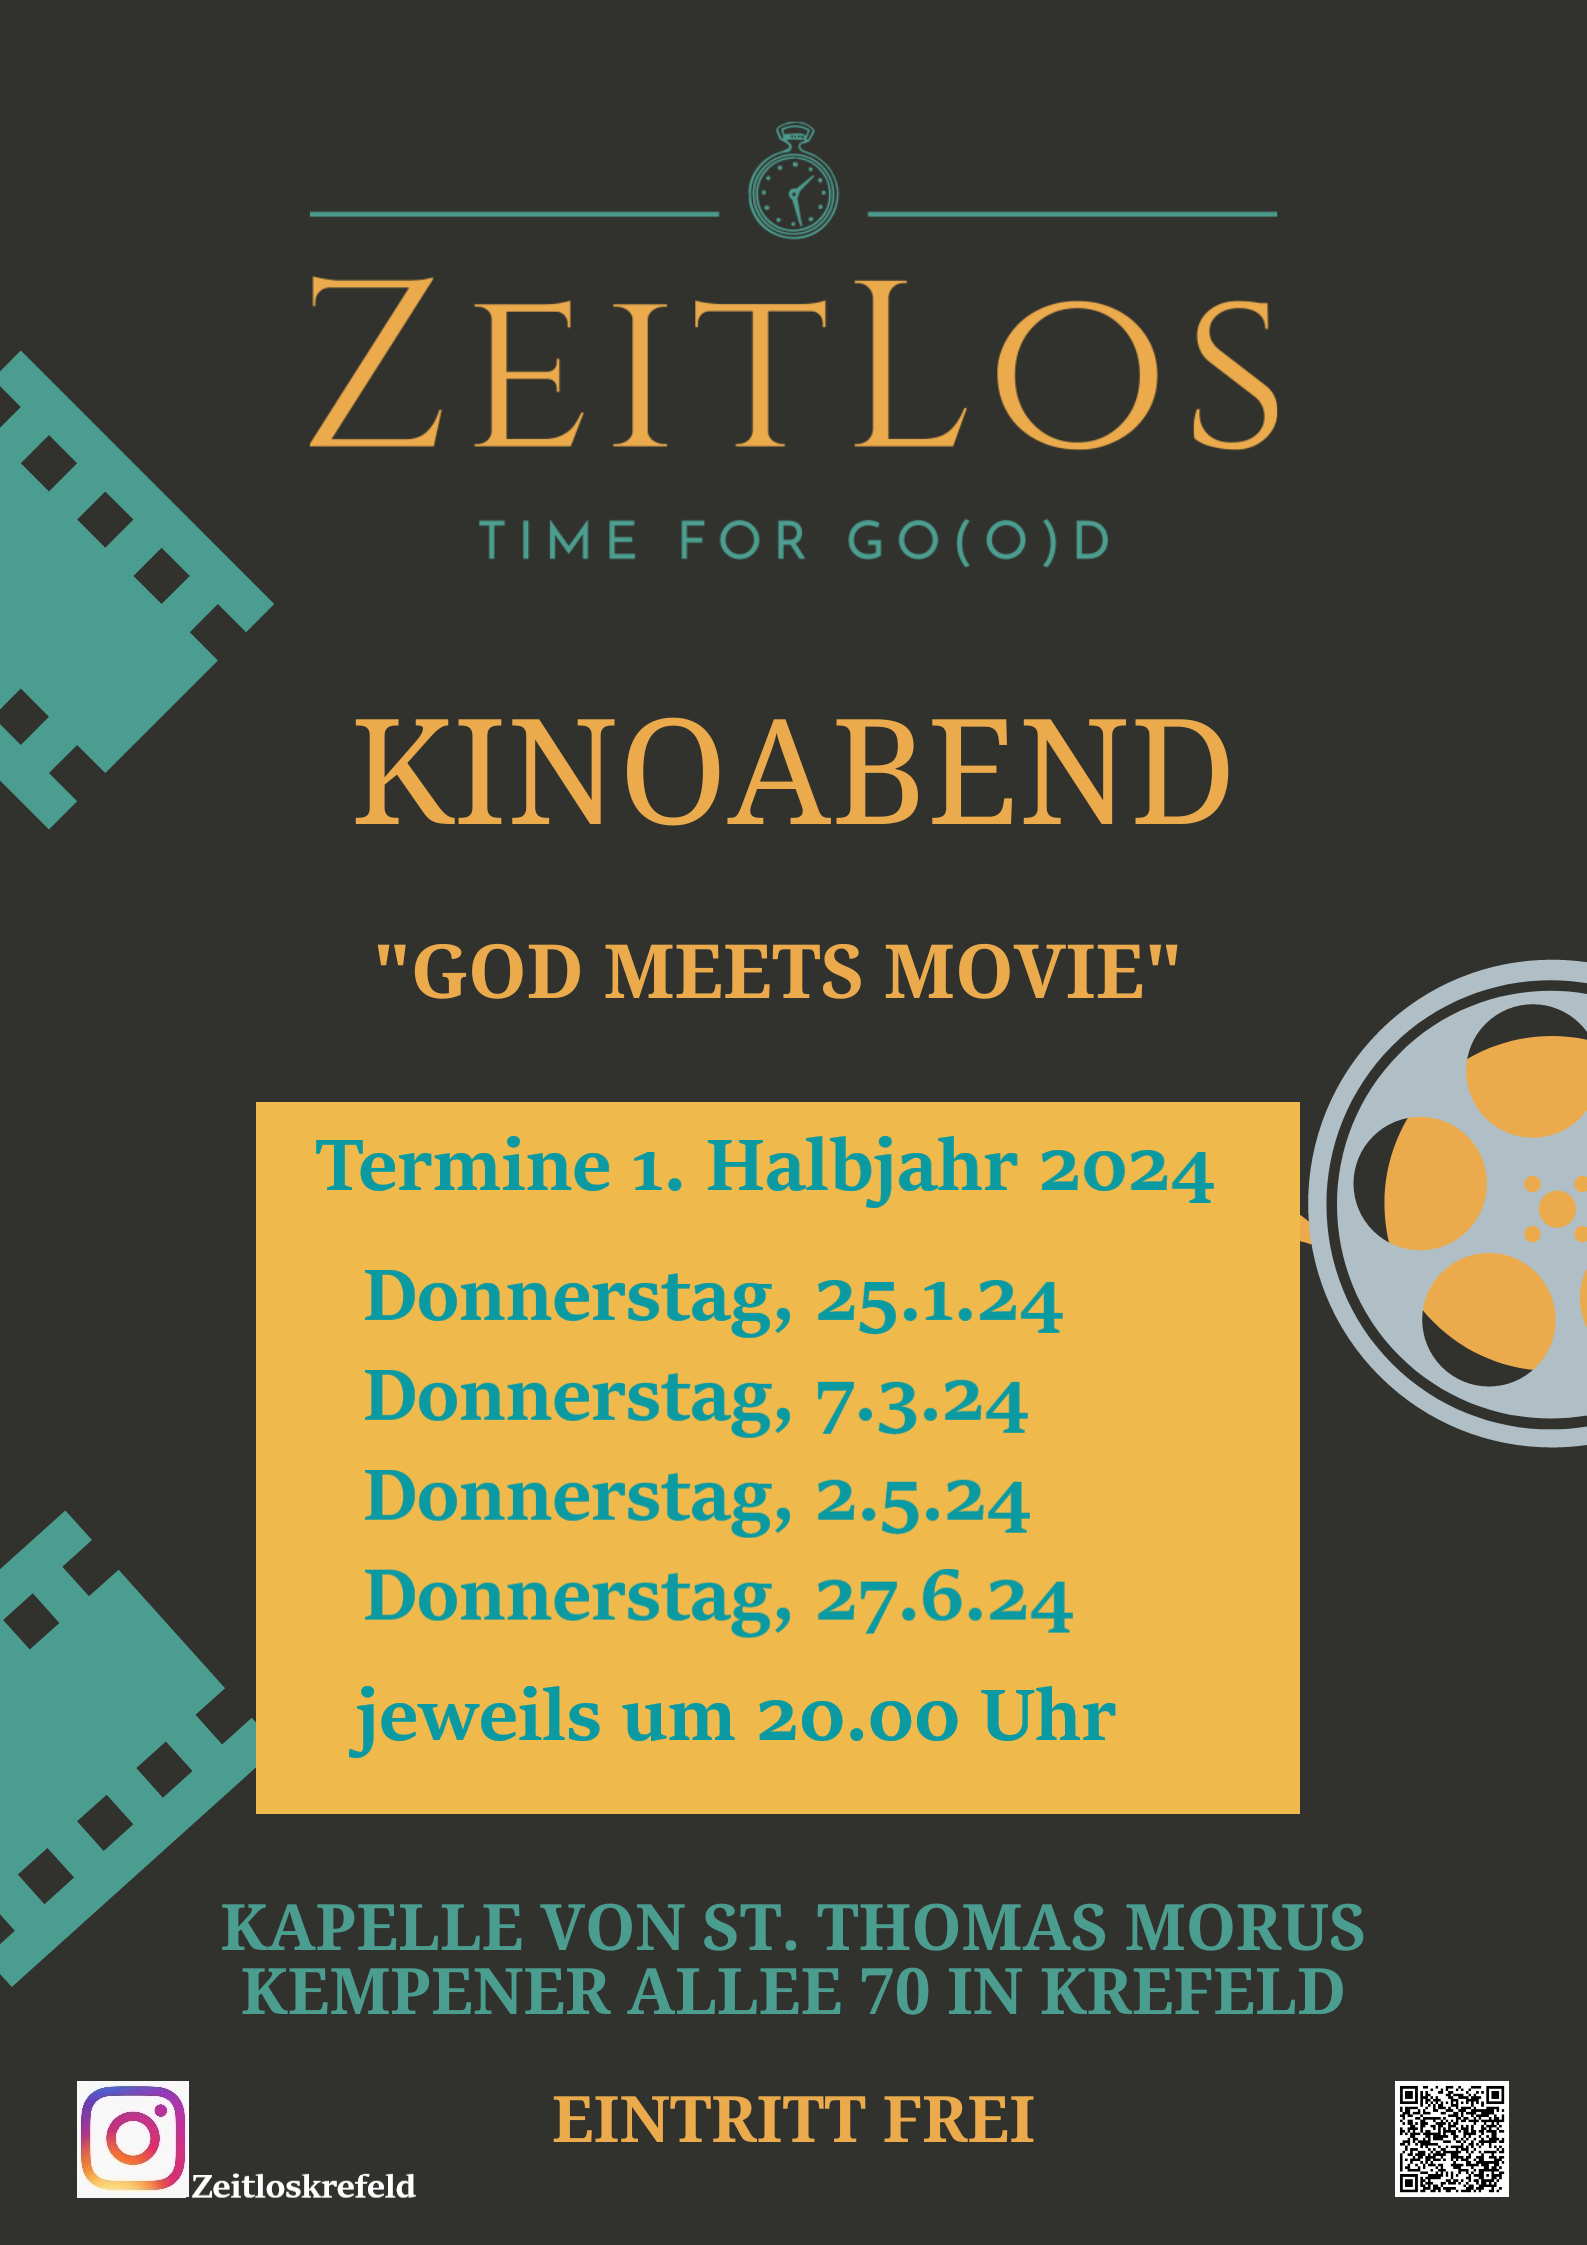 KinoabendTermine1.Hj24 (c) Matthias Totten